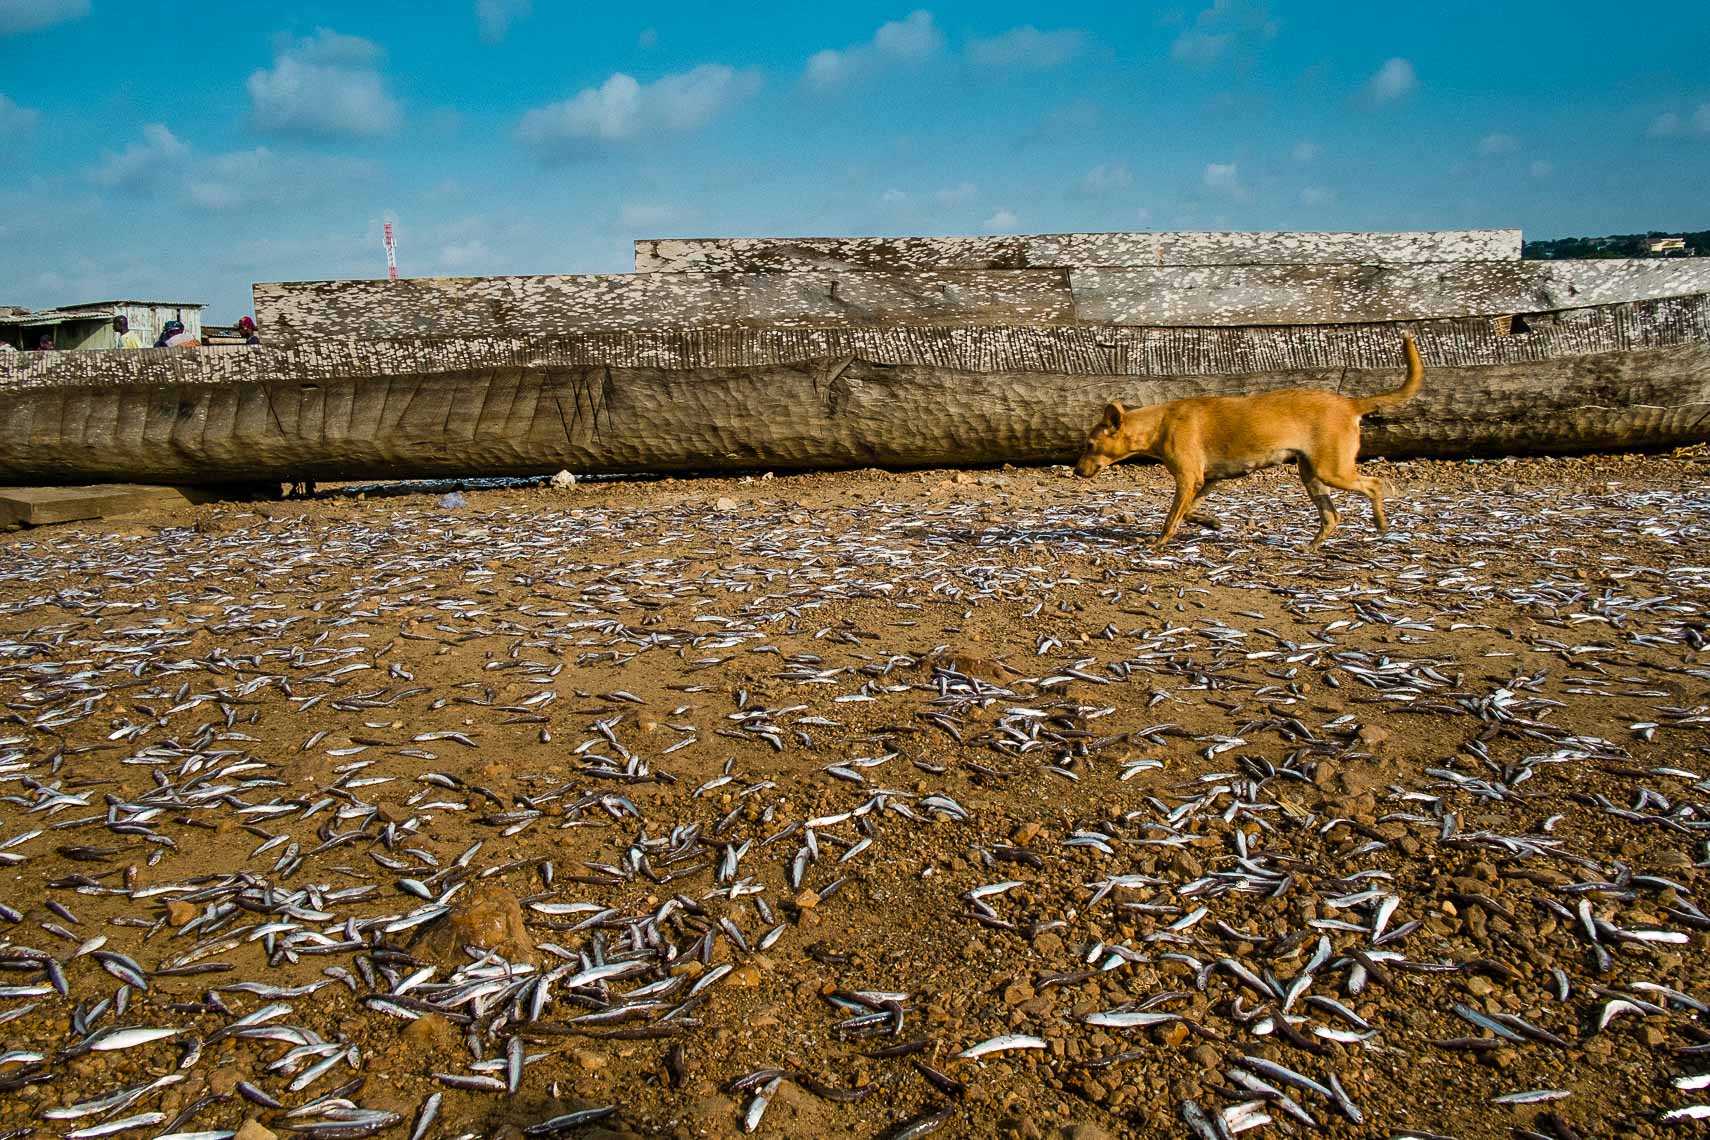 fish drying in the sun as dog walks by - teshie nungua